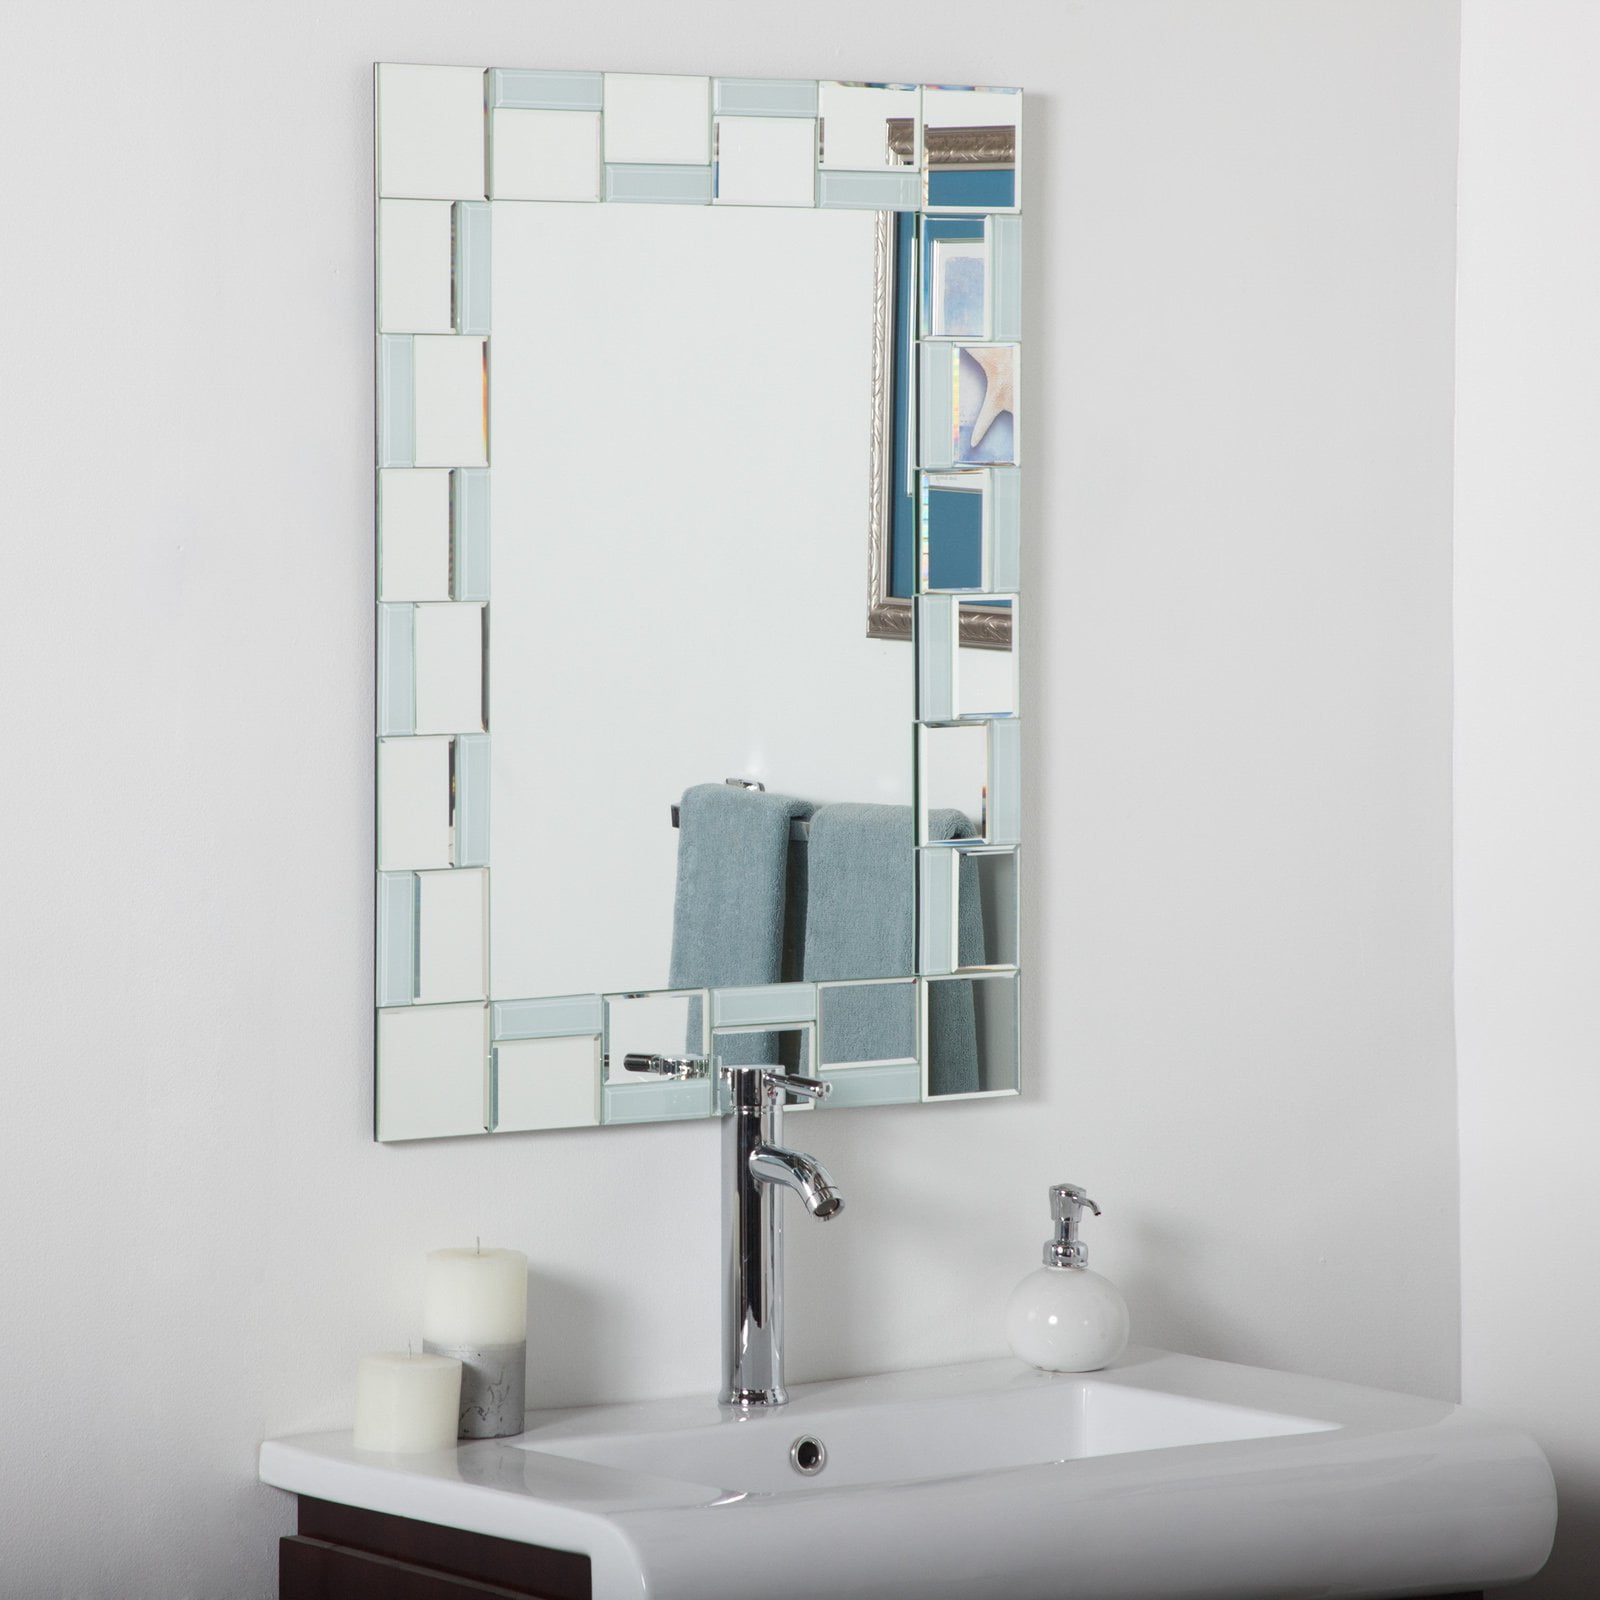 Décor Wonderland Quebec Modern Bathroom Wall Mirror 24W x